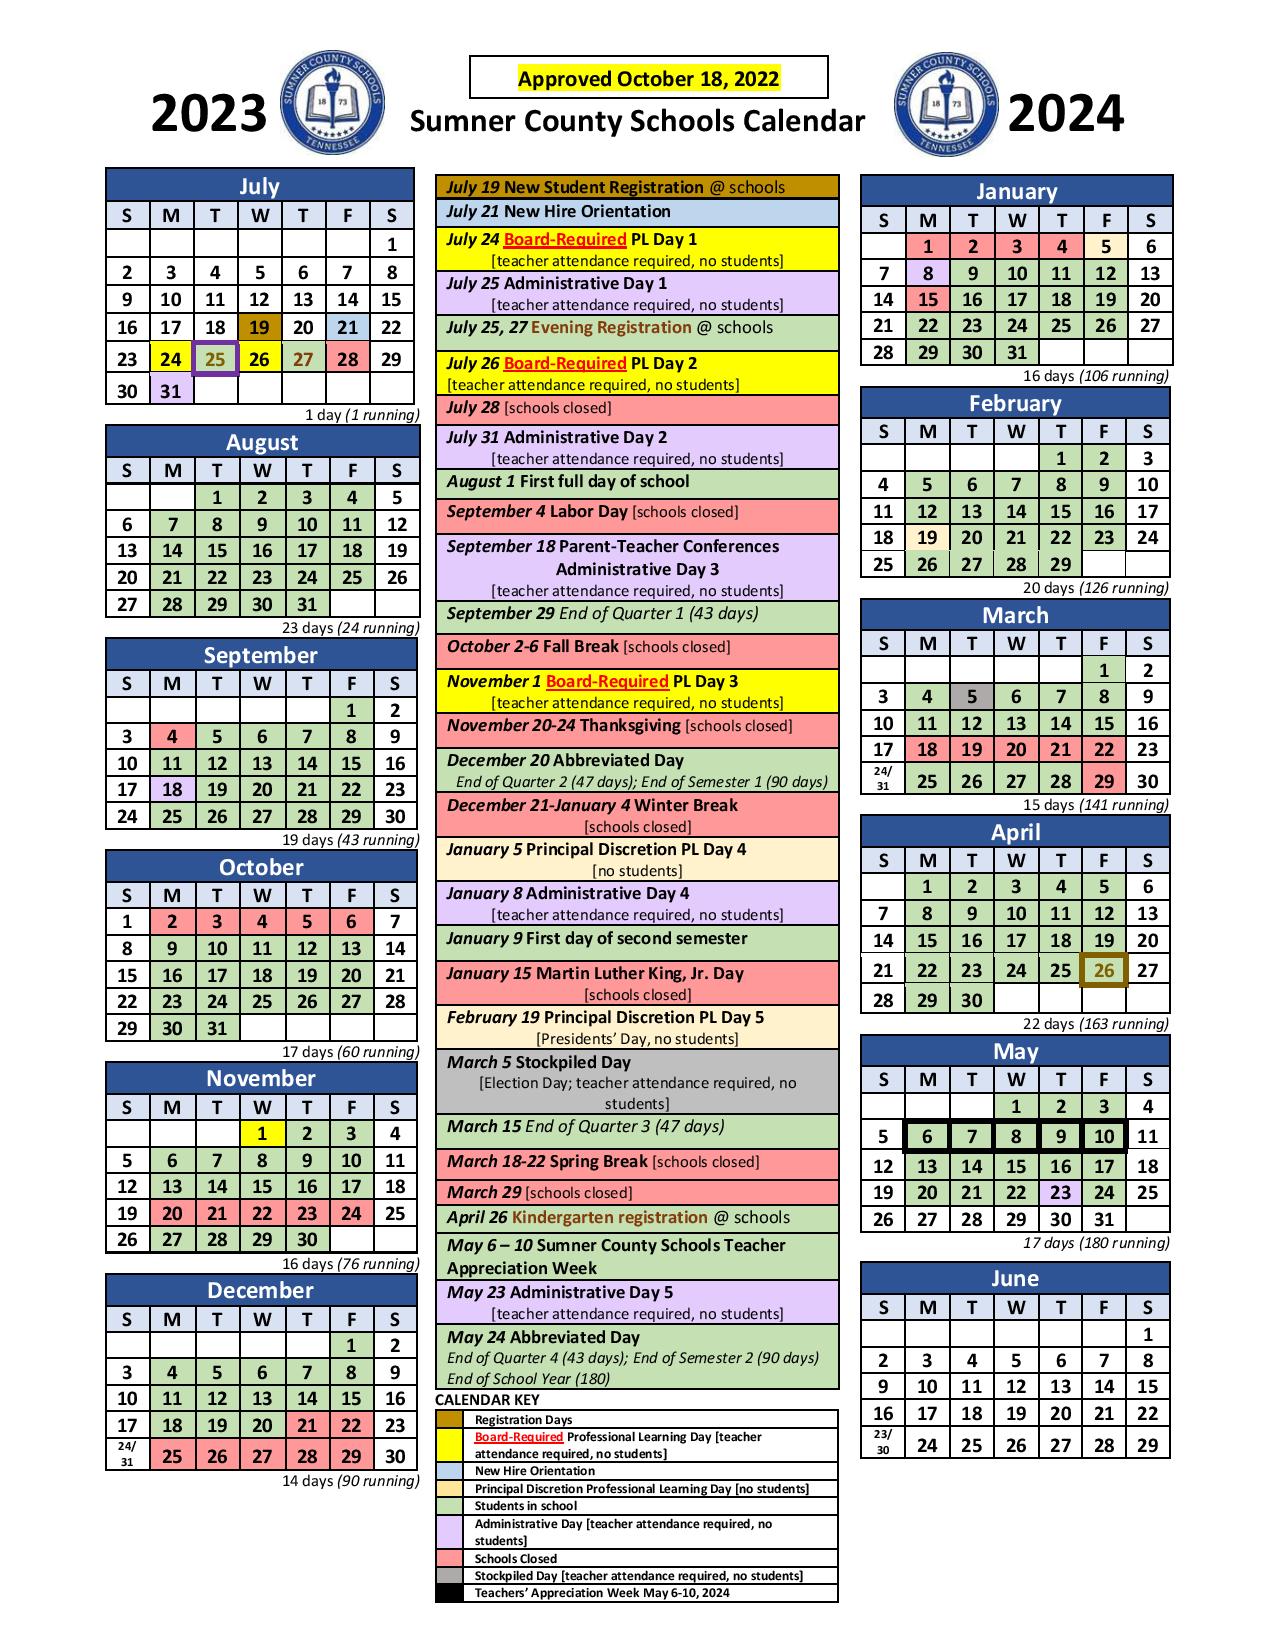 Sumner County 2025 School Calendar - lindi brianna